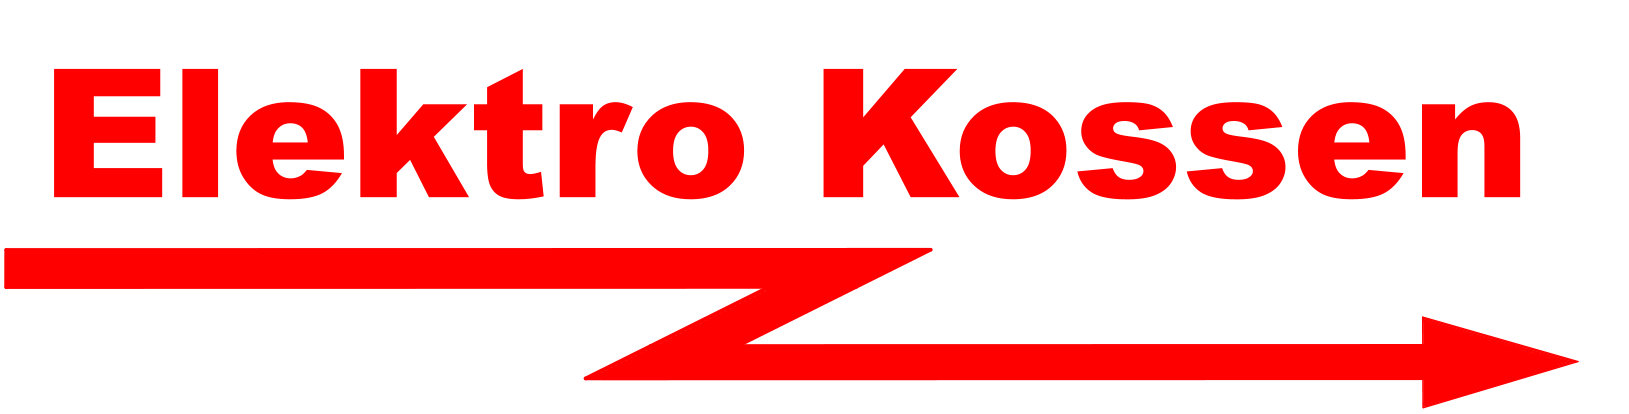 Elektro Kossen GmbH & Co. KG